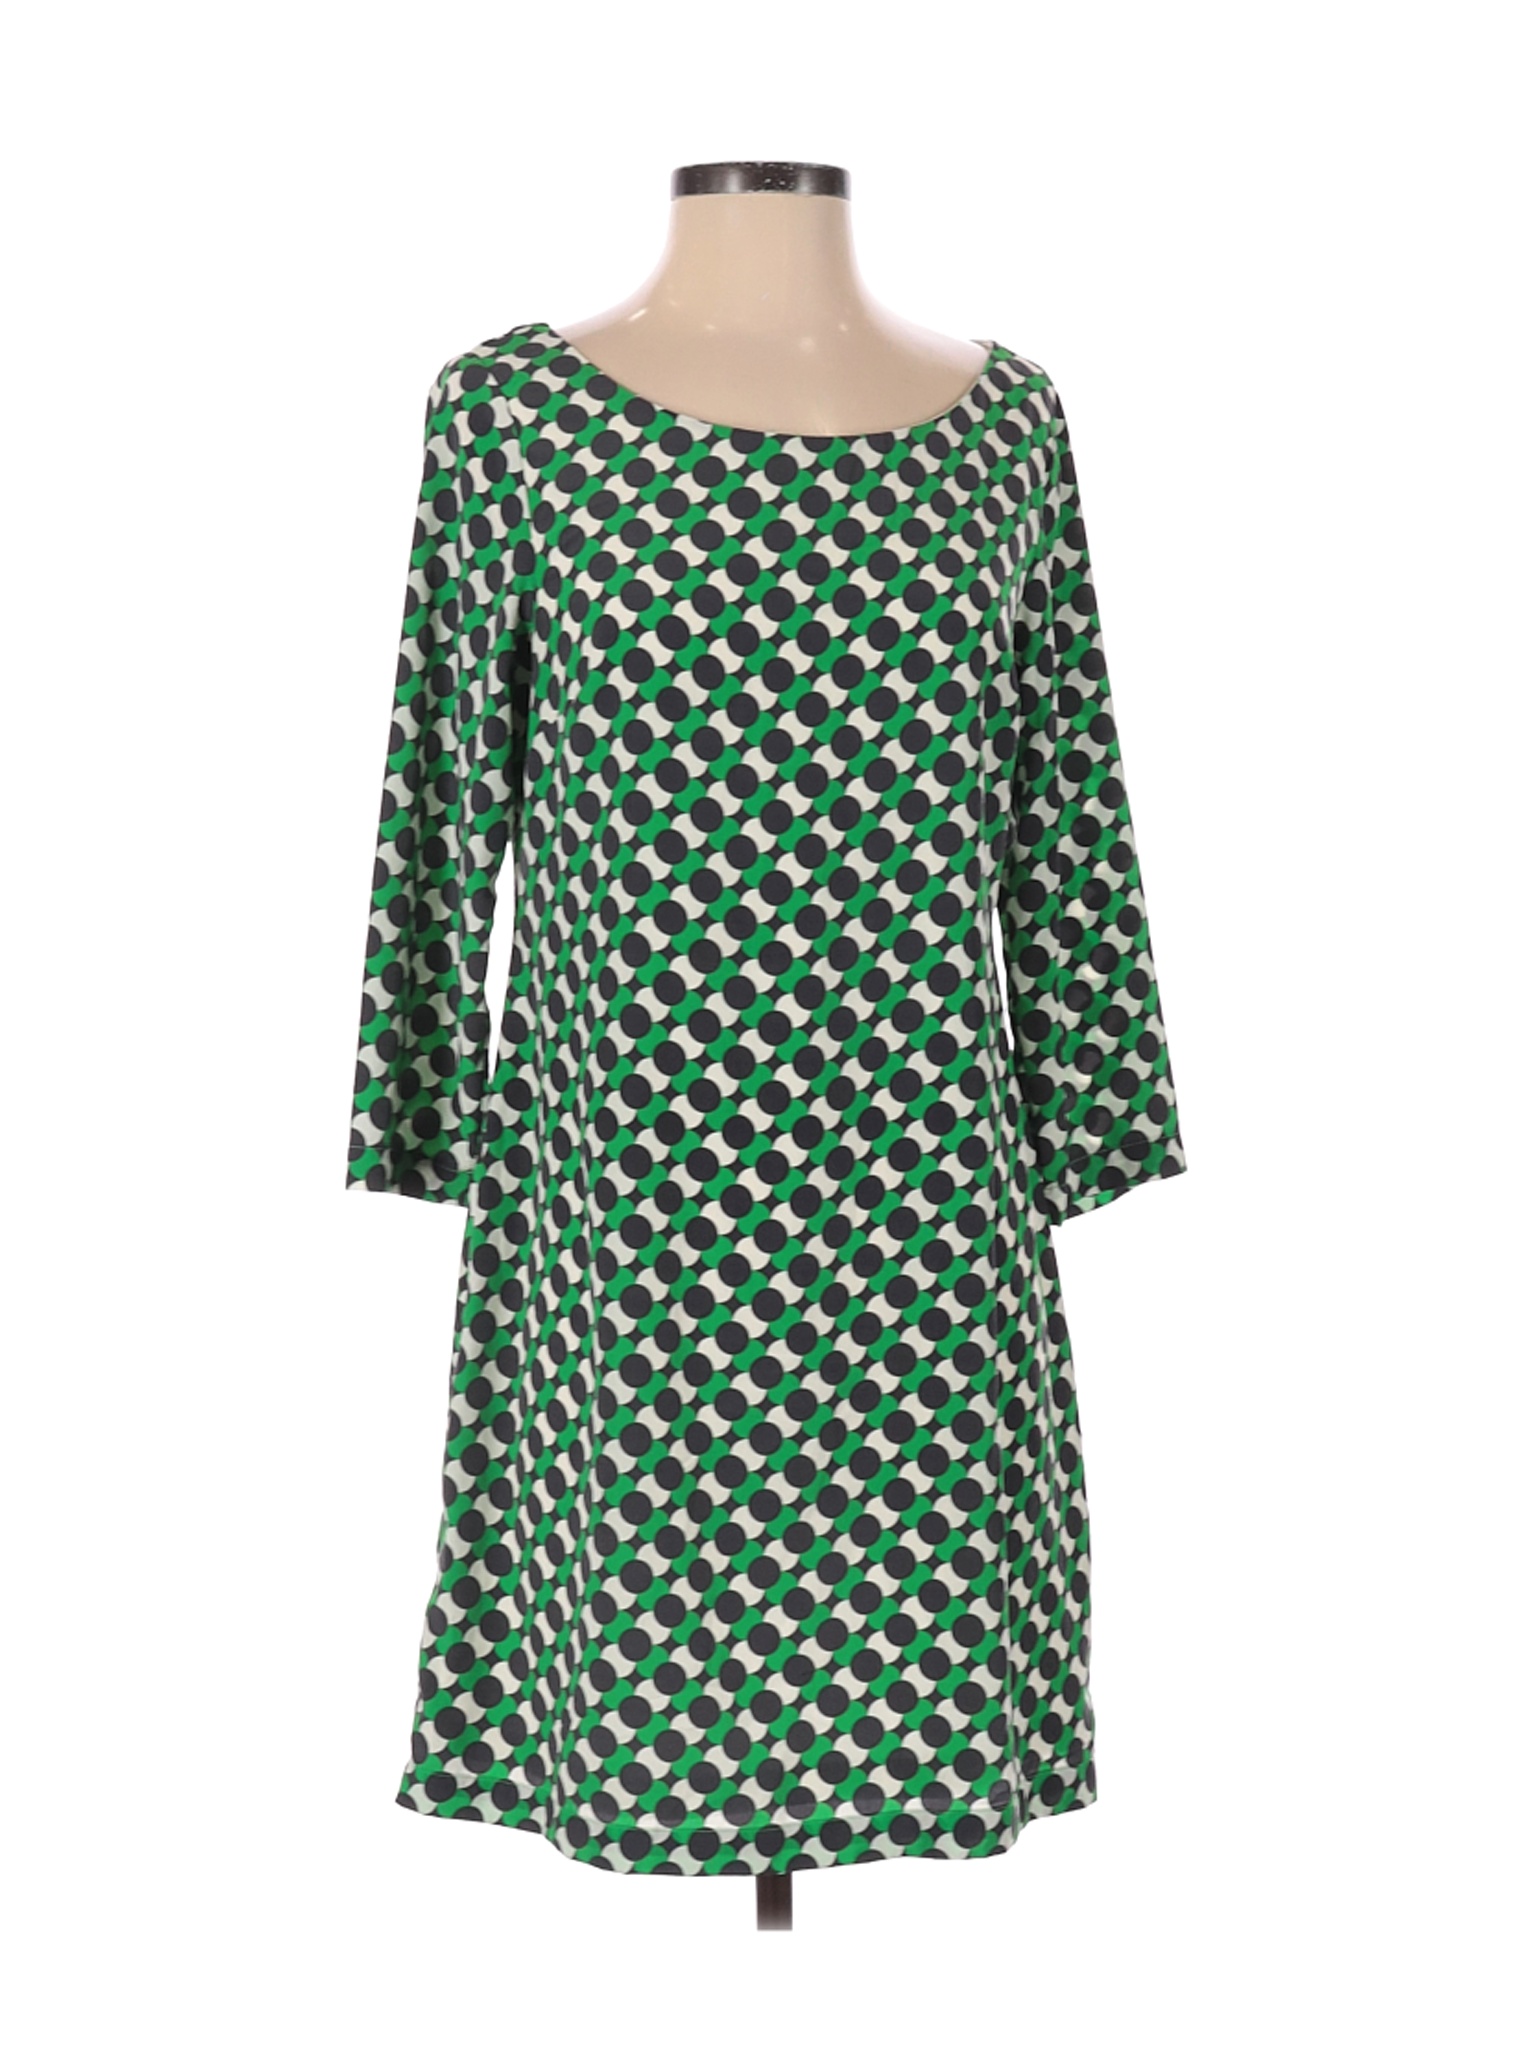 Old Navy Women Green Casual Dress S | eBay